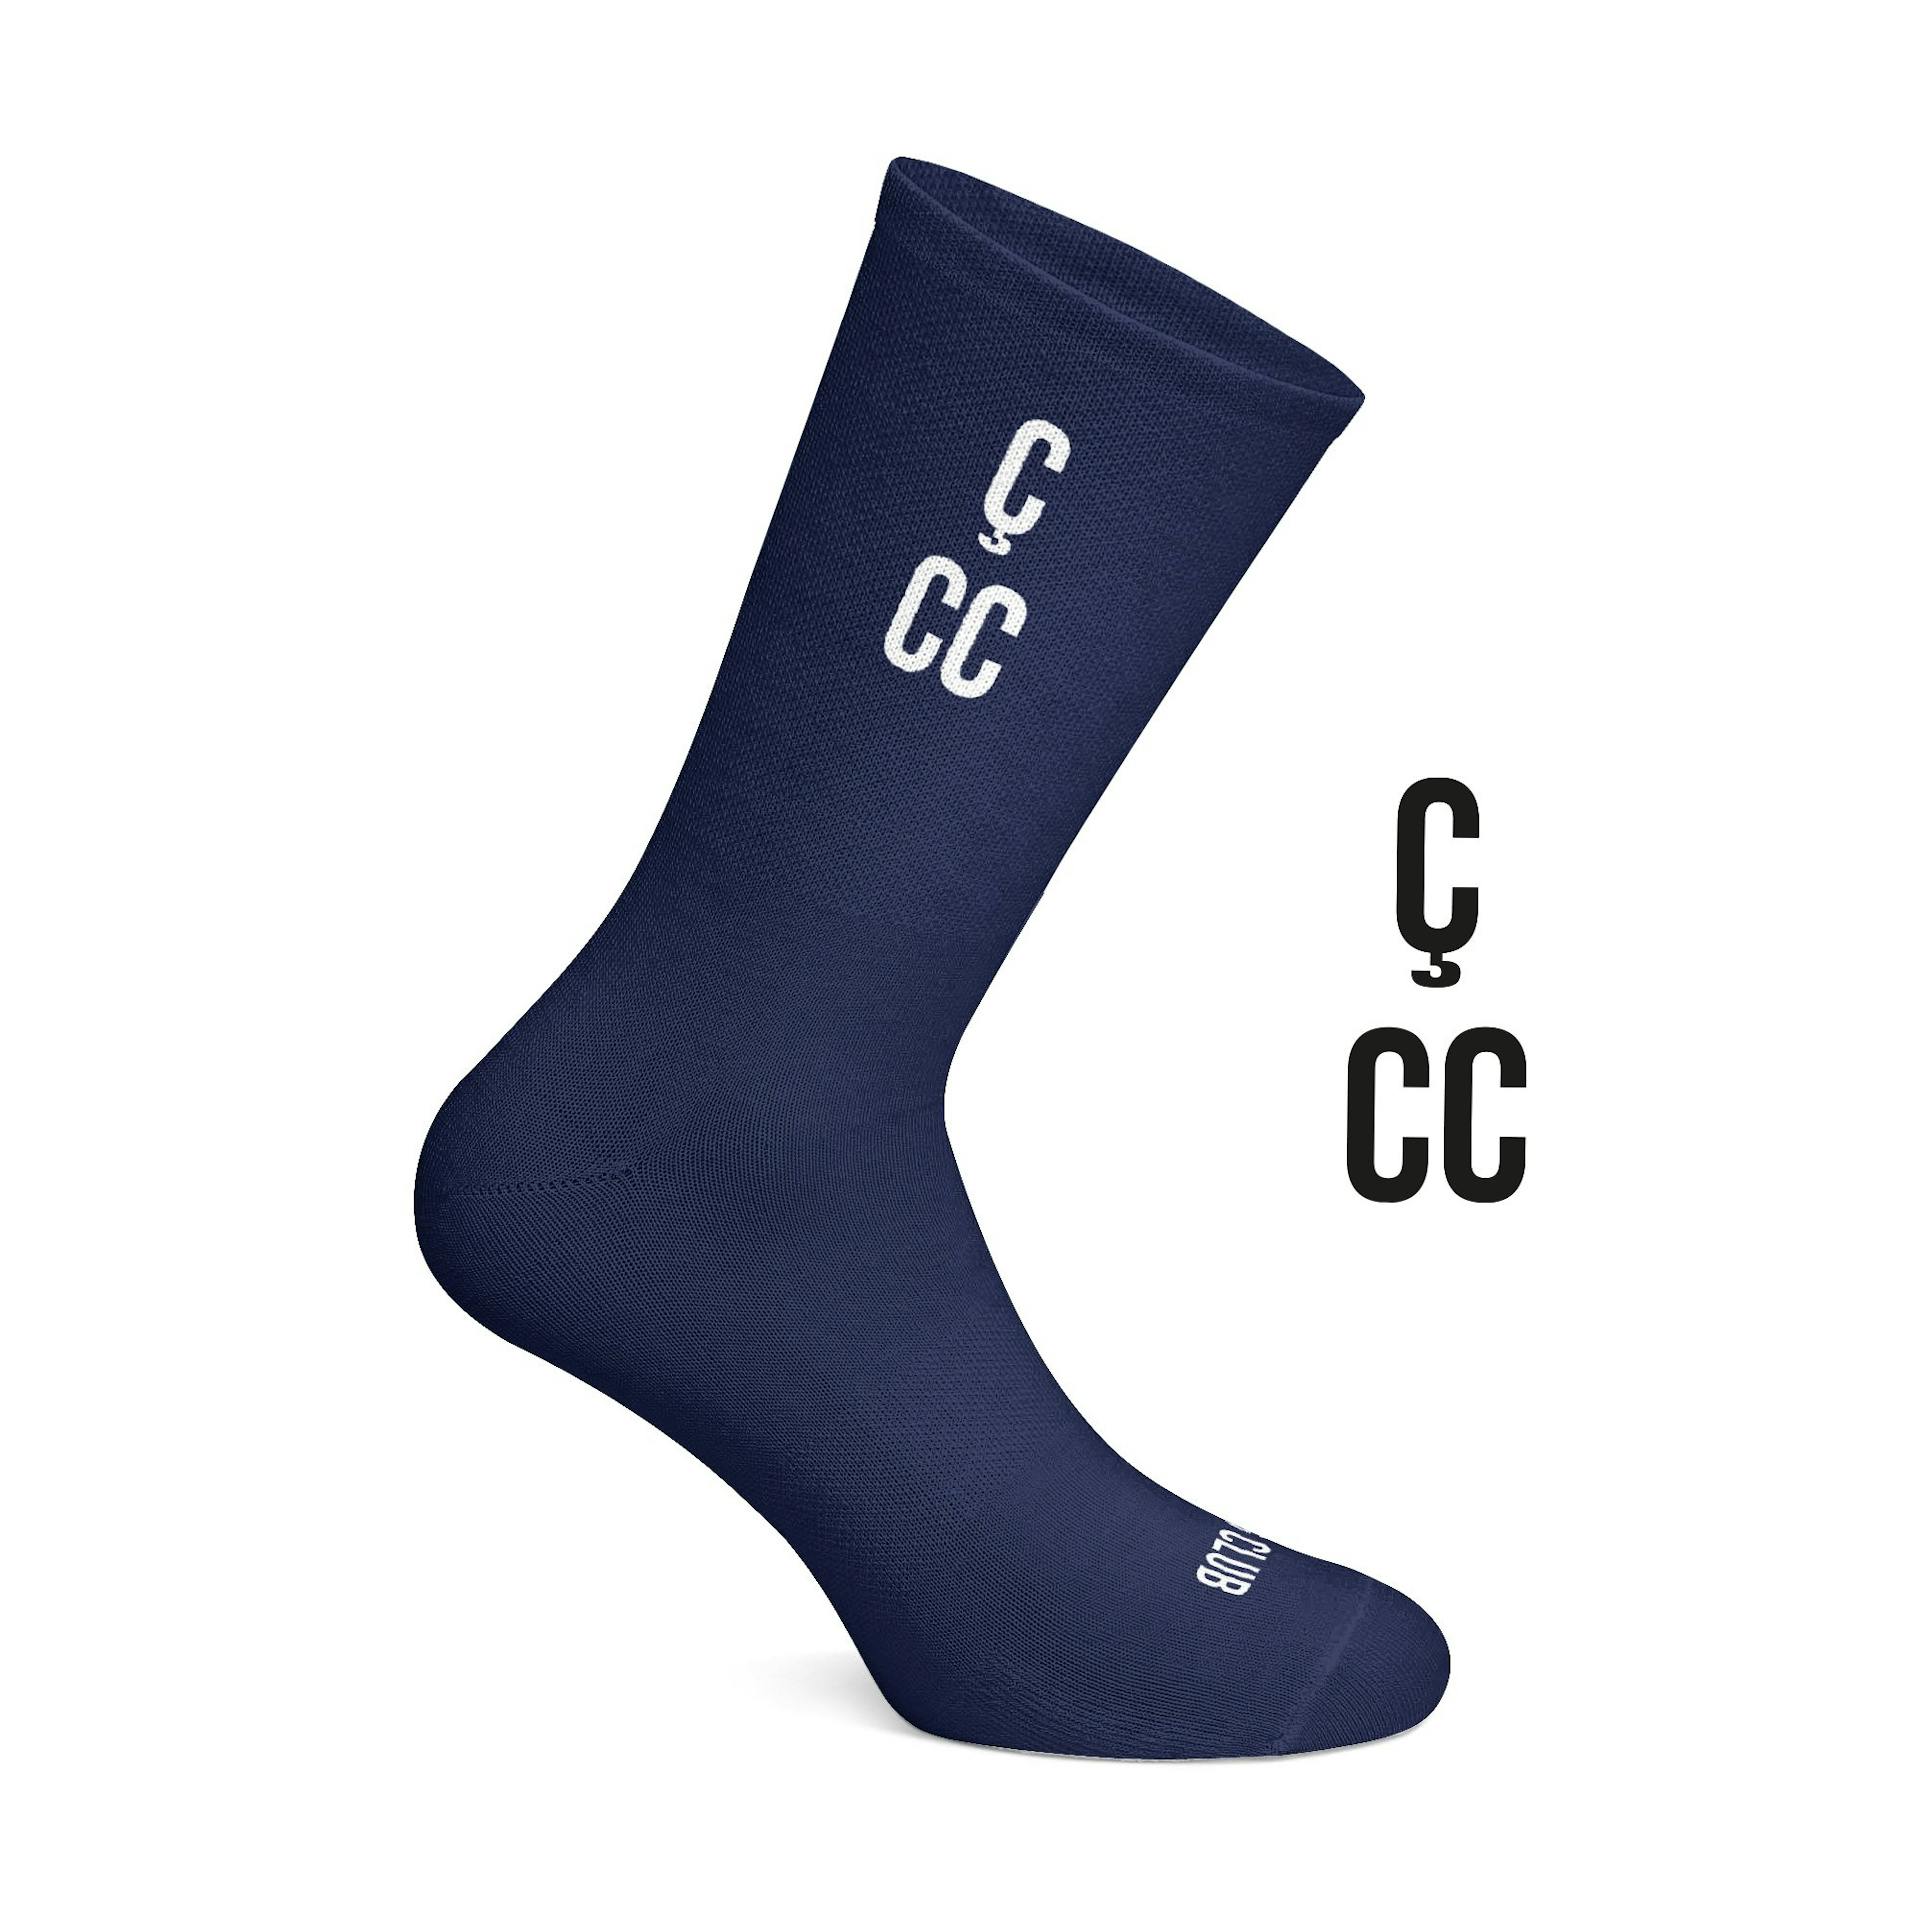 Çois Cycling Club Comfortable Socks - Navy